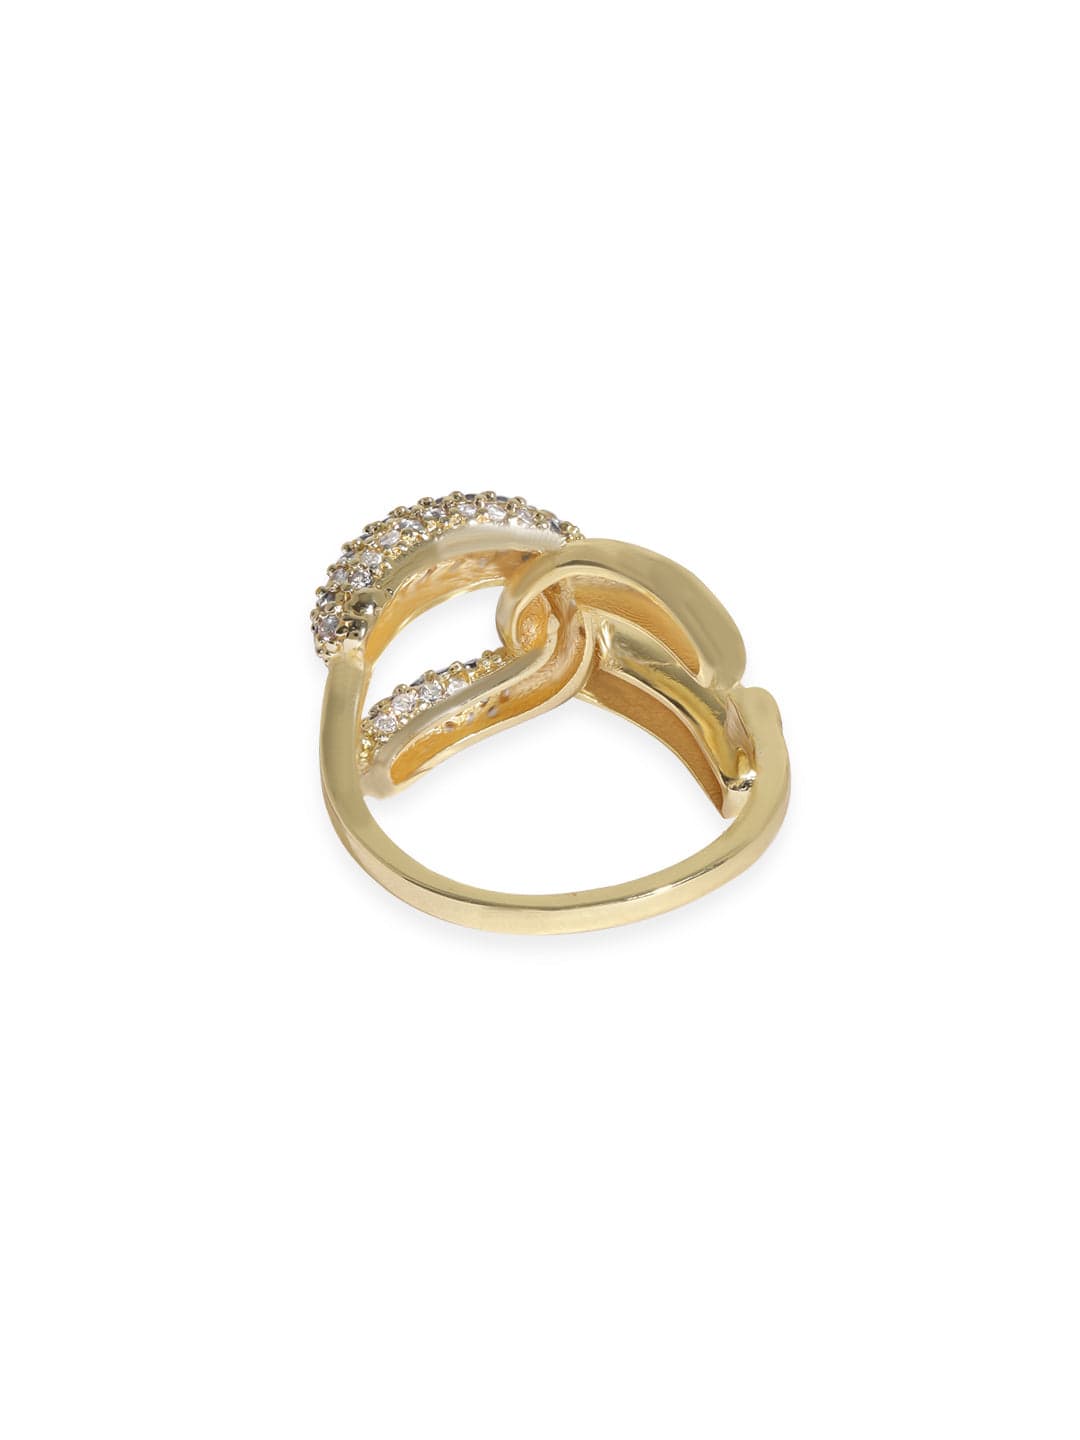 Rubans Voguish 18K Gold-Plated CZ Studded Finger Ring Rings